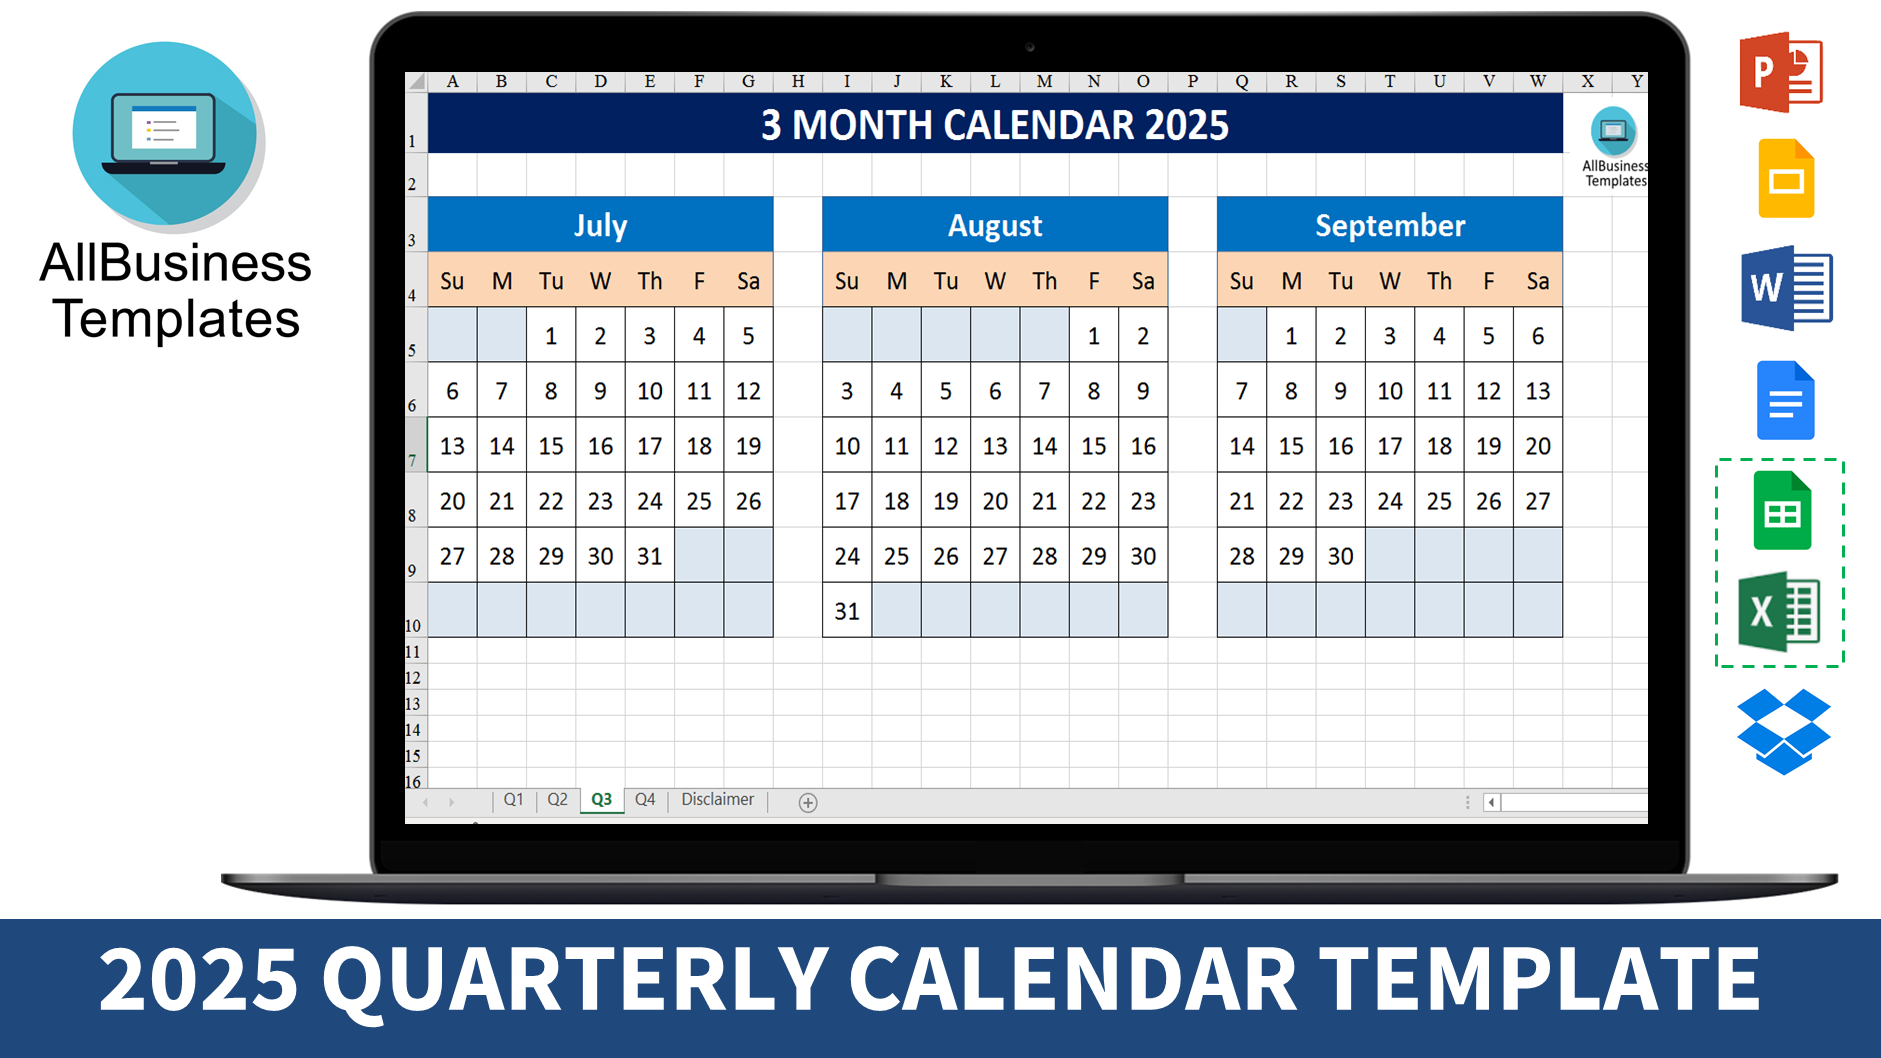 3 Month Calendar 2025 模板